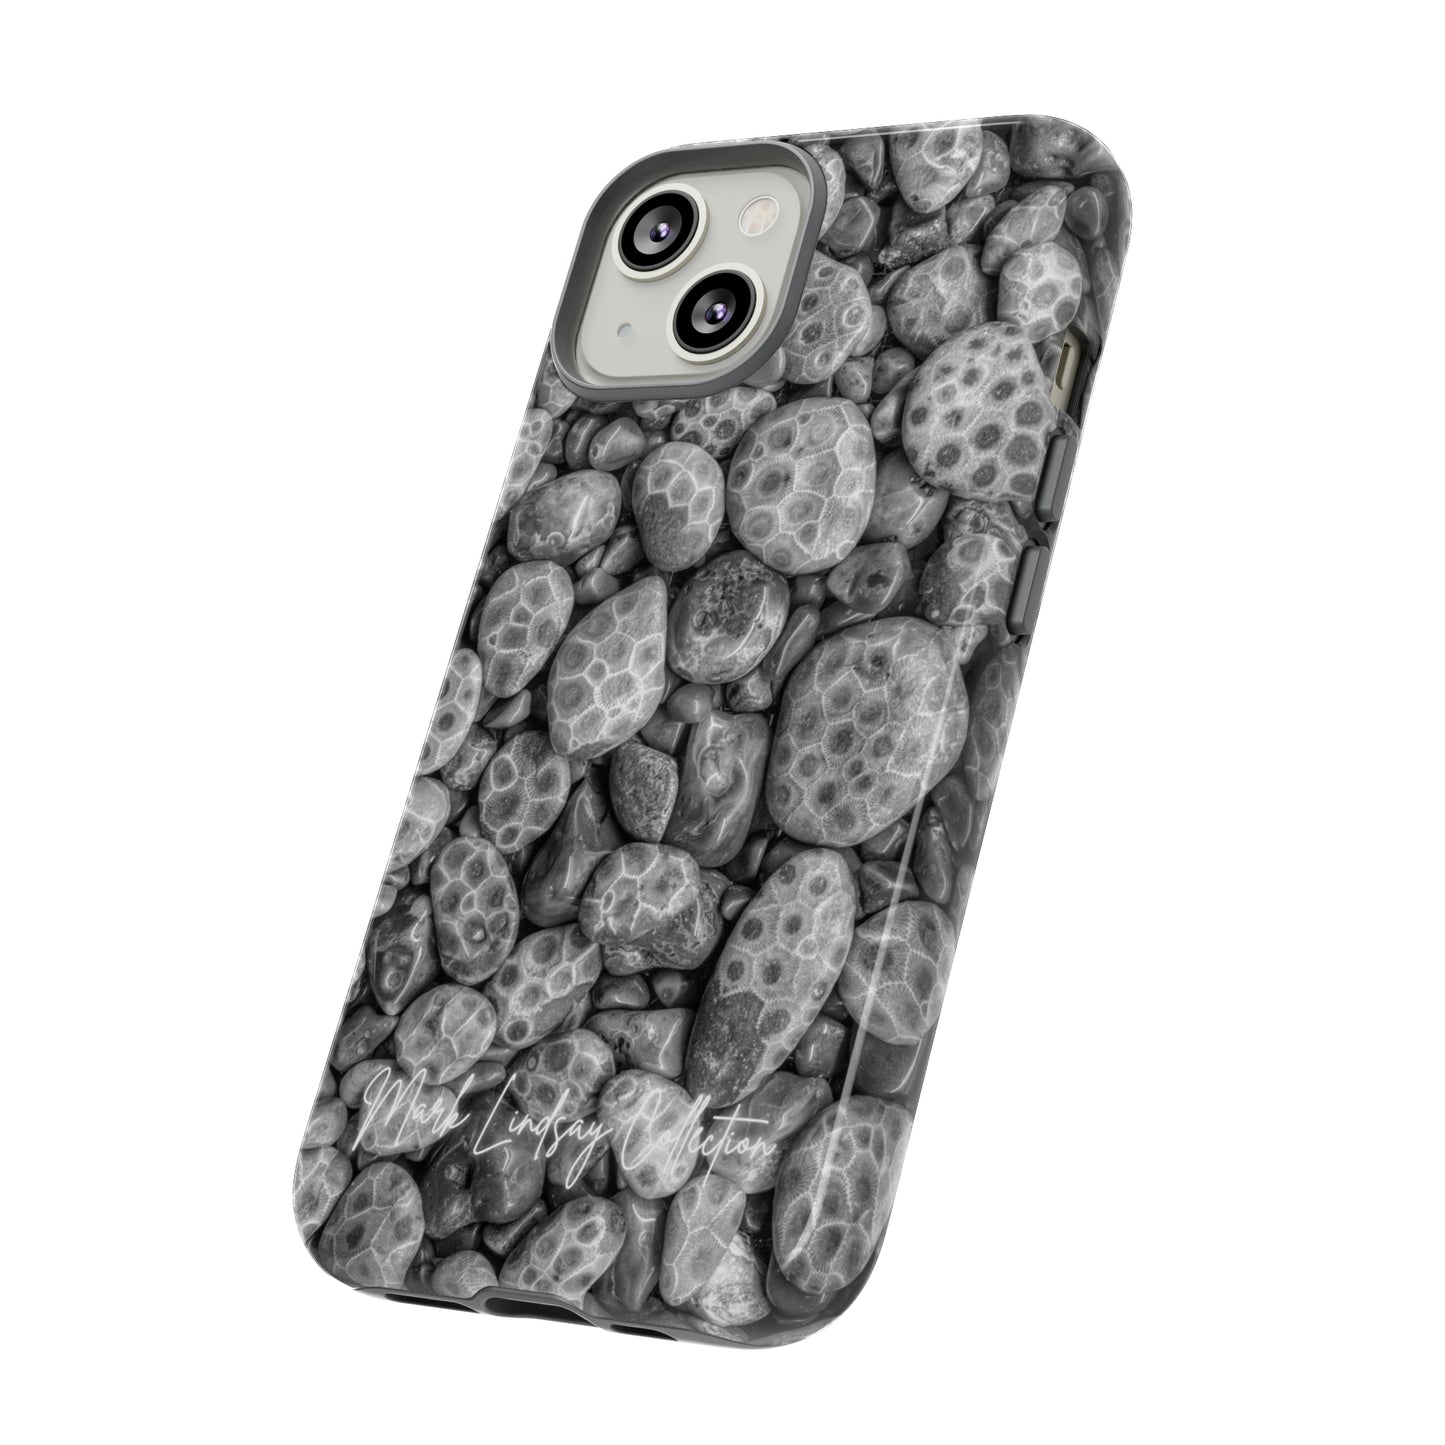 Petoskey Stone Impact Resistant Tough Case (IPhone)